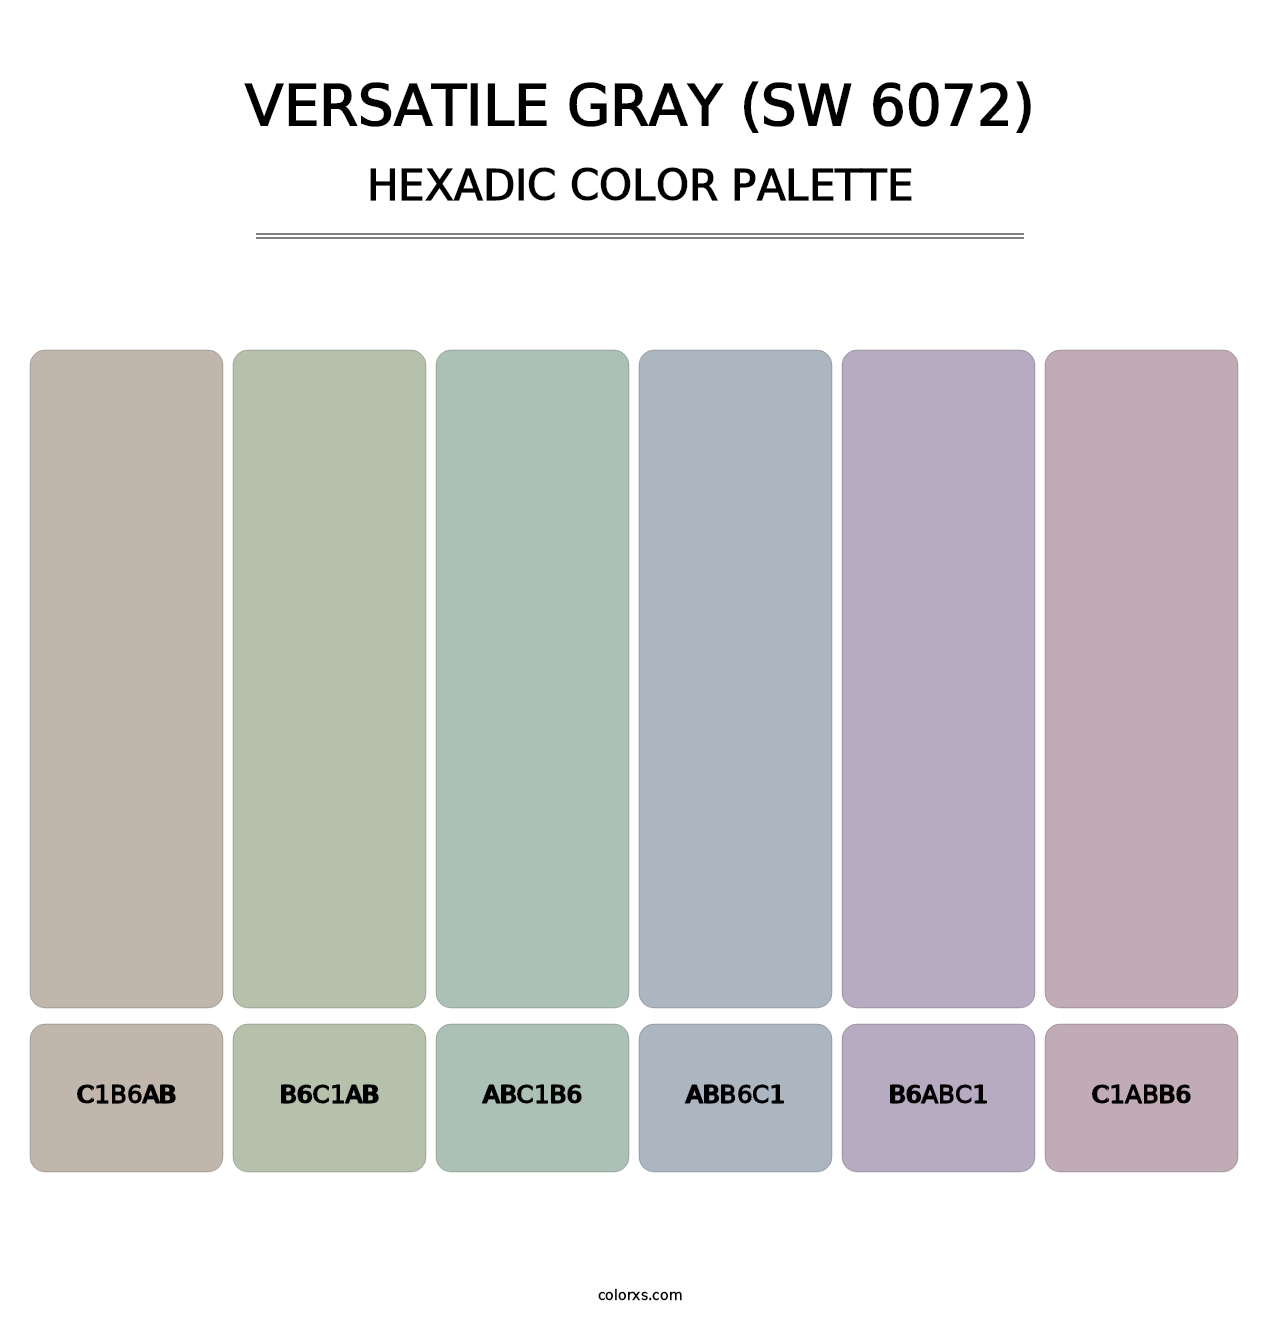 Versatile Gray (SW 6072) - Hexadic Color Palette